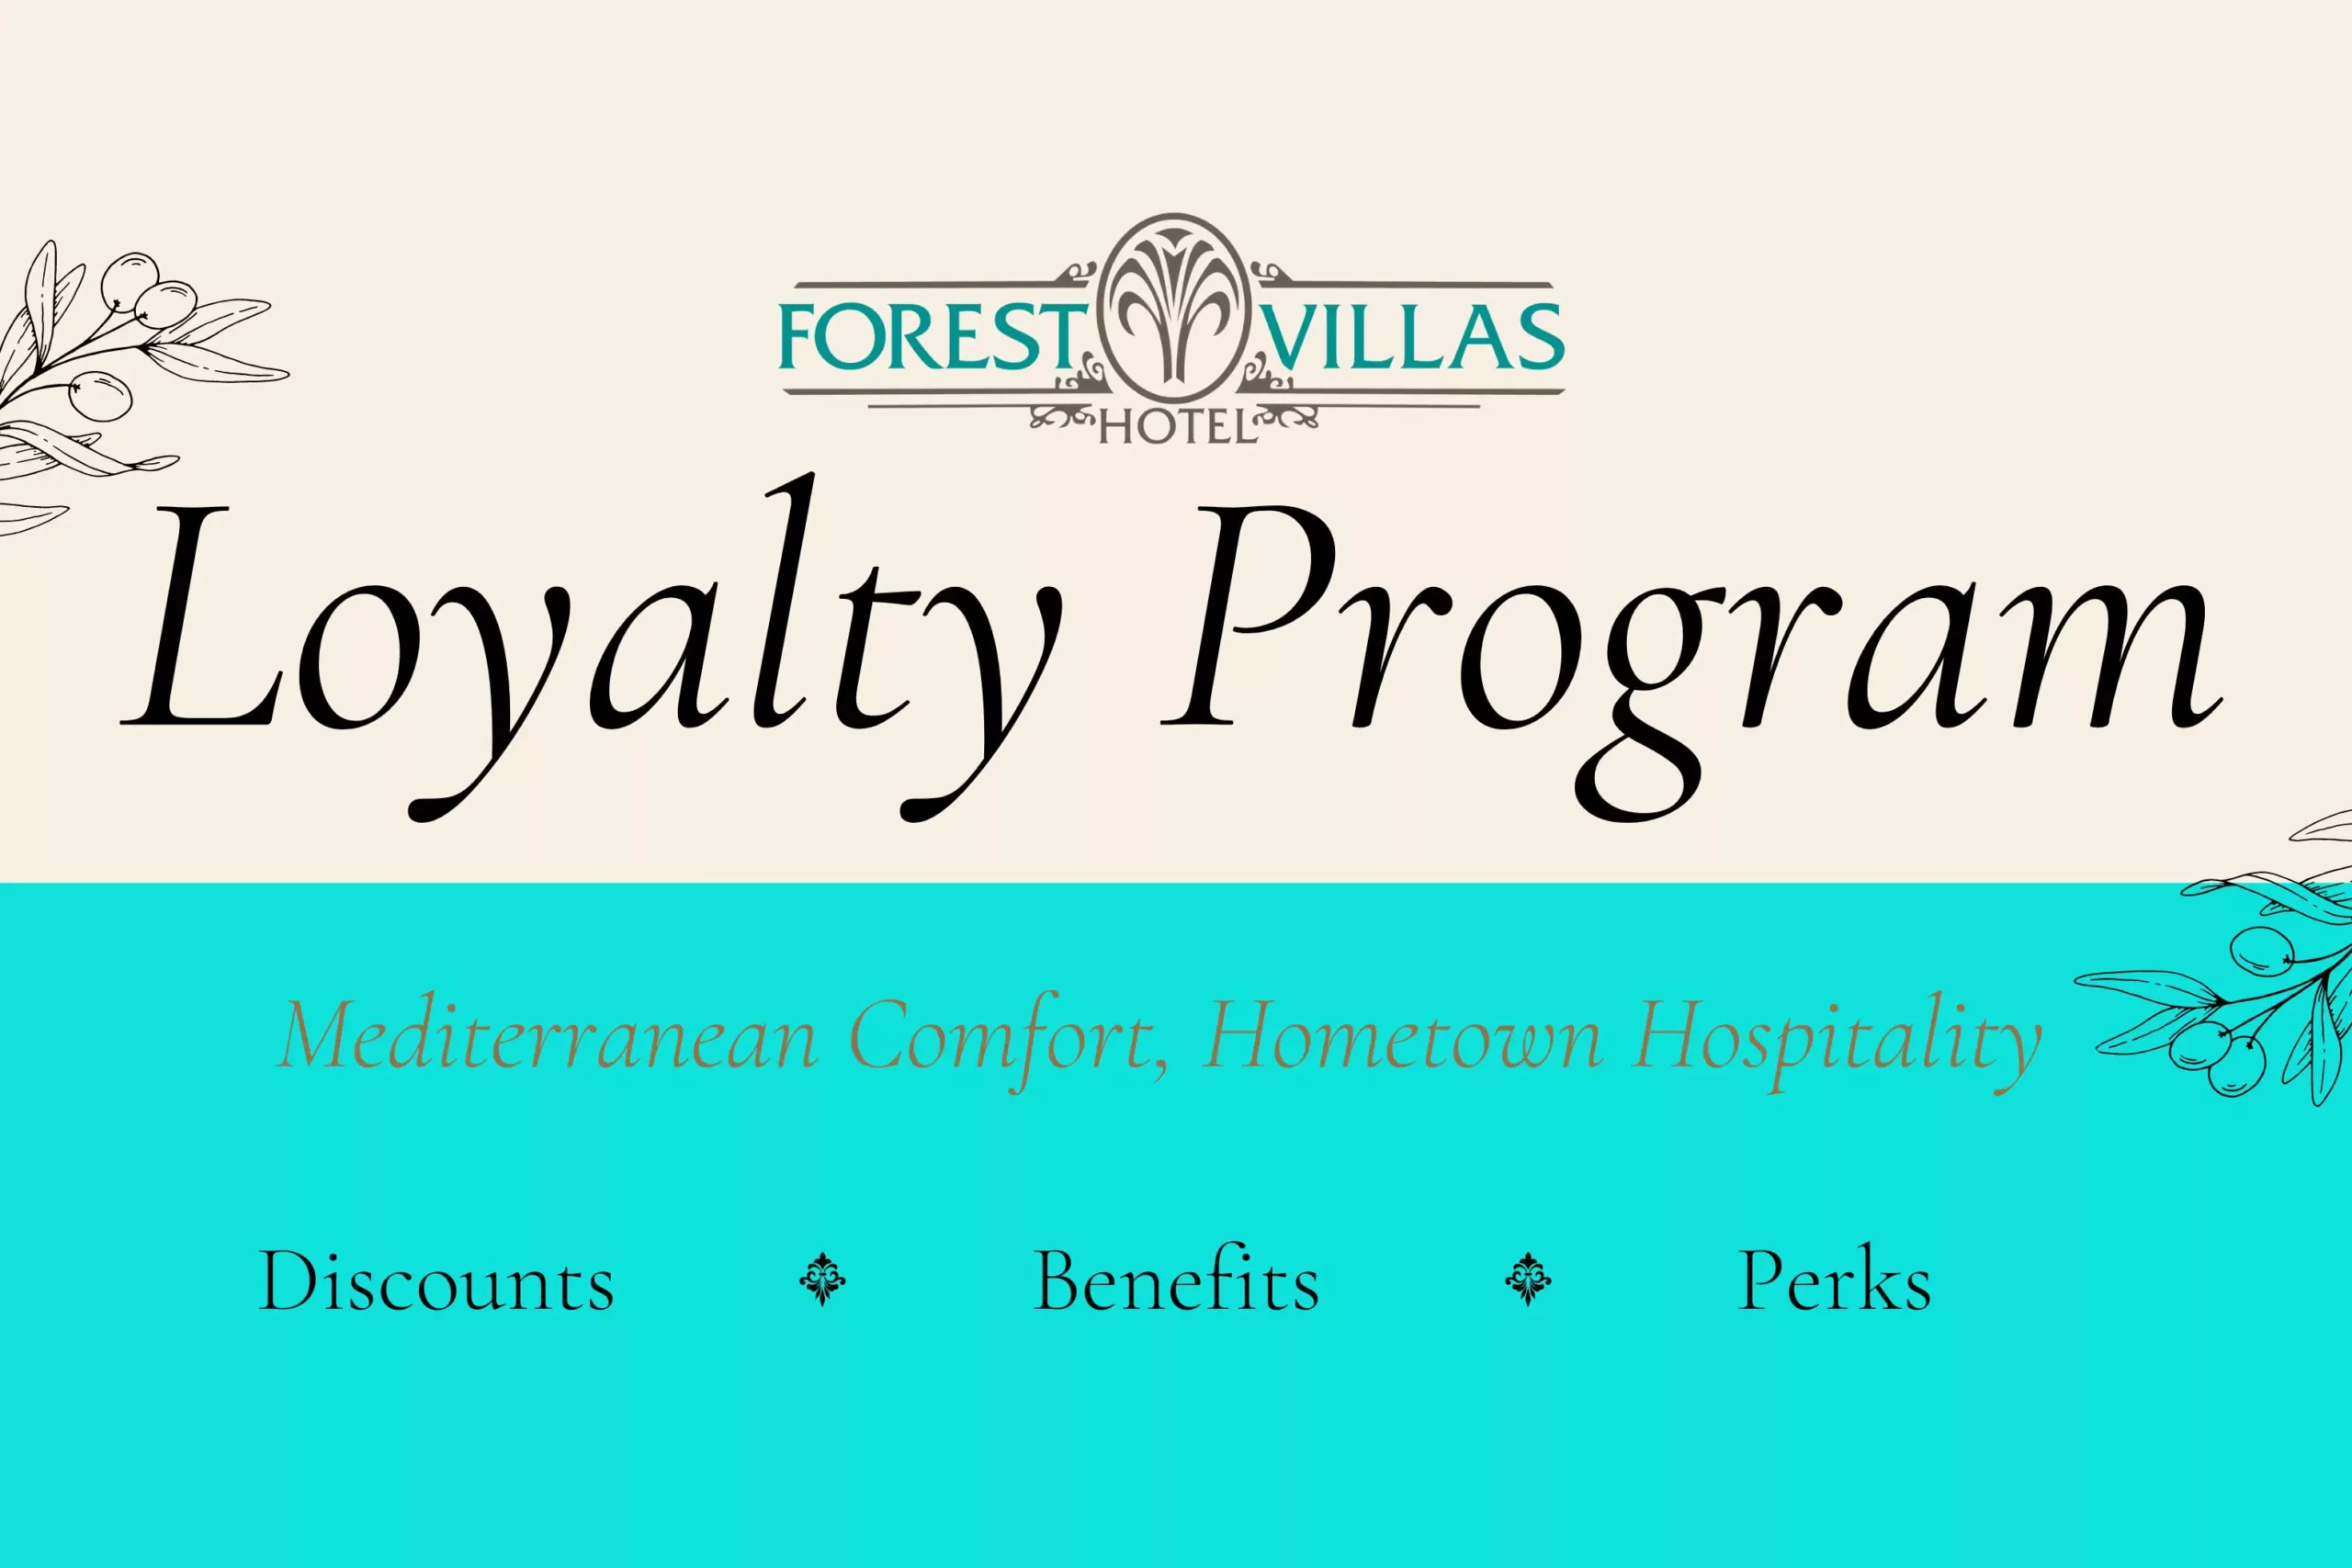 Forest Villas Prescott - Loyalty Card